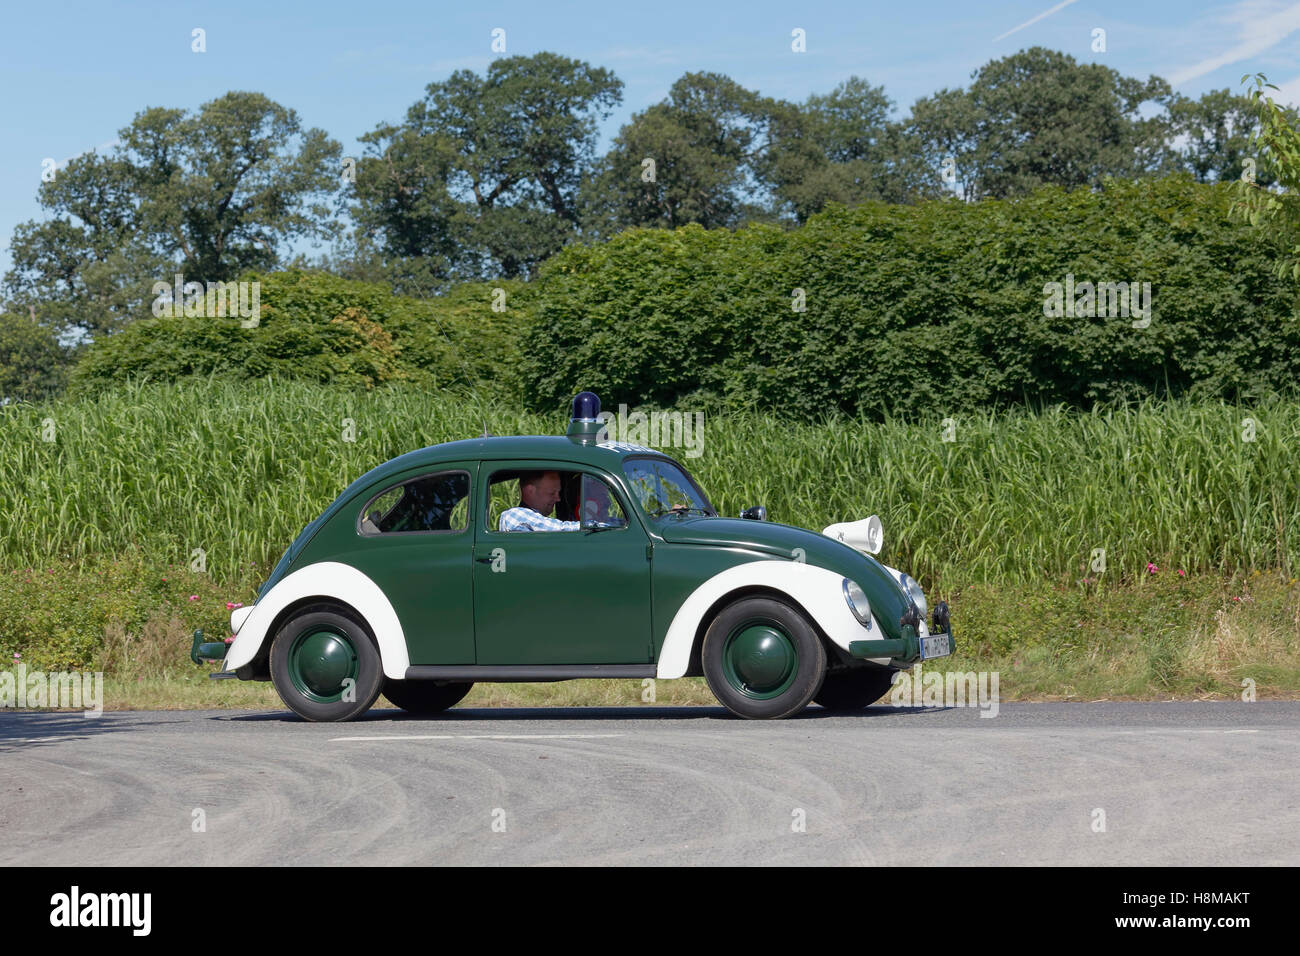 Police beetle car -Fotos und -Bildmaterial in hoher Auflösung – Alamy